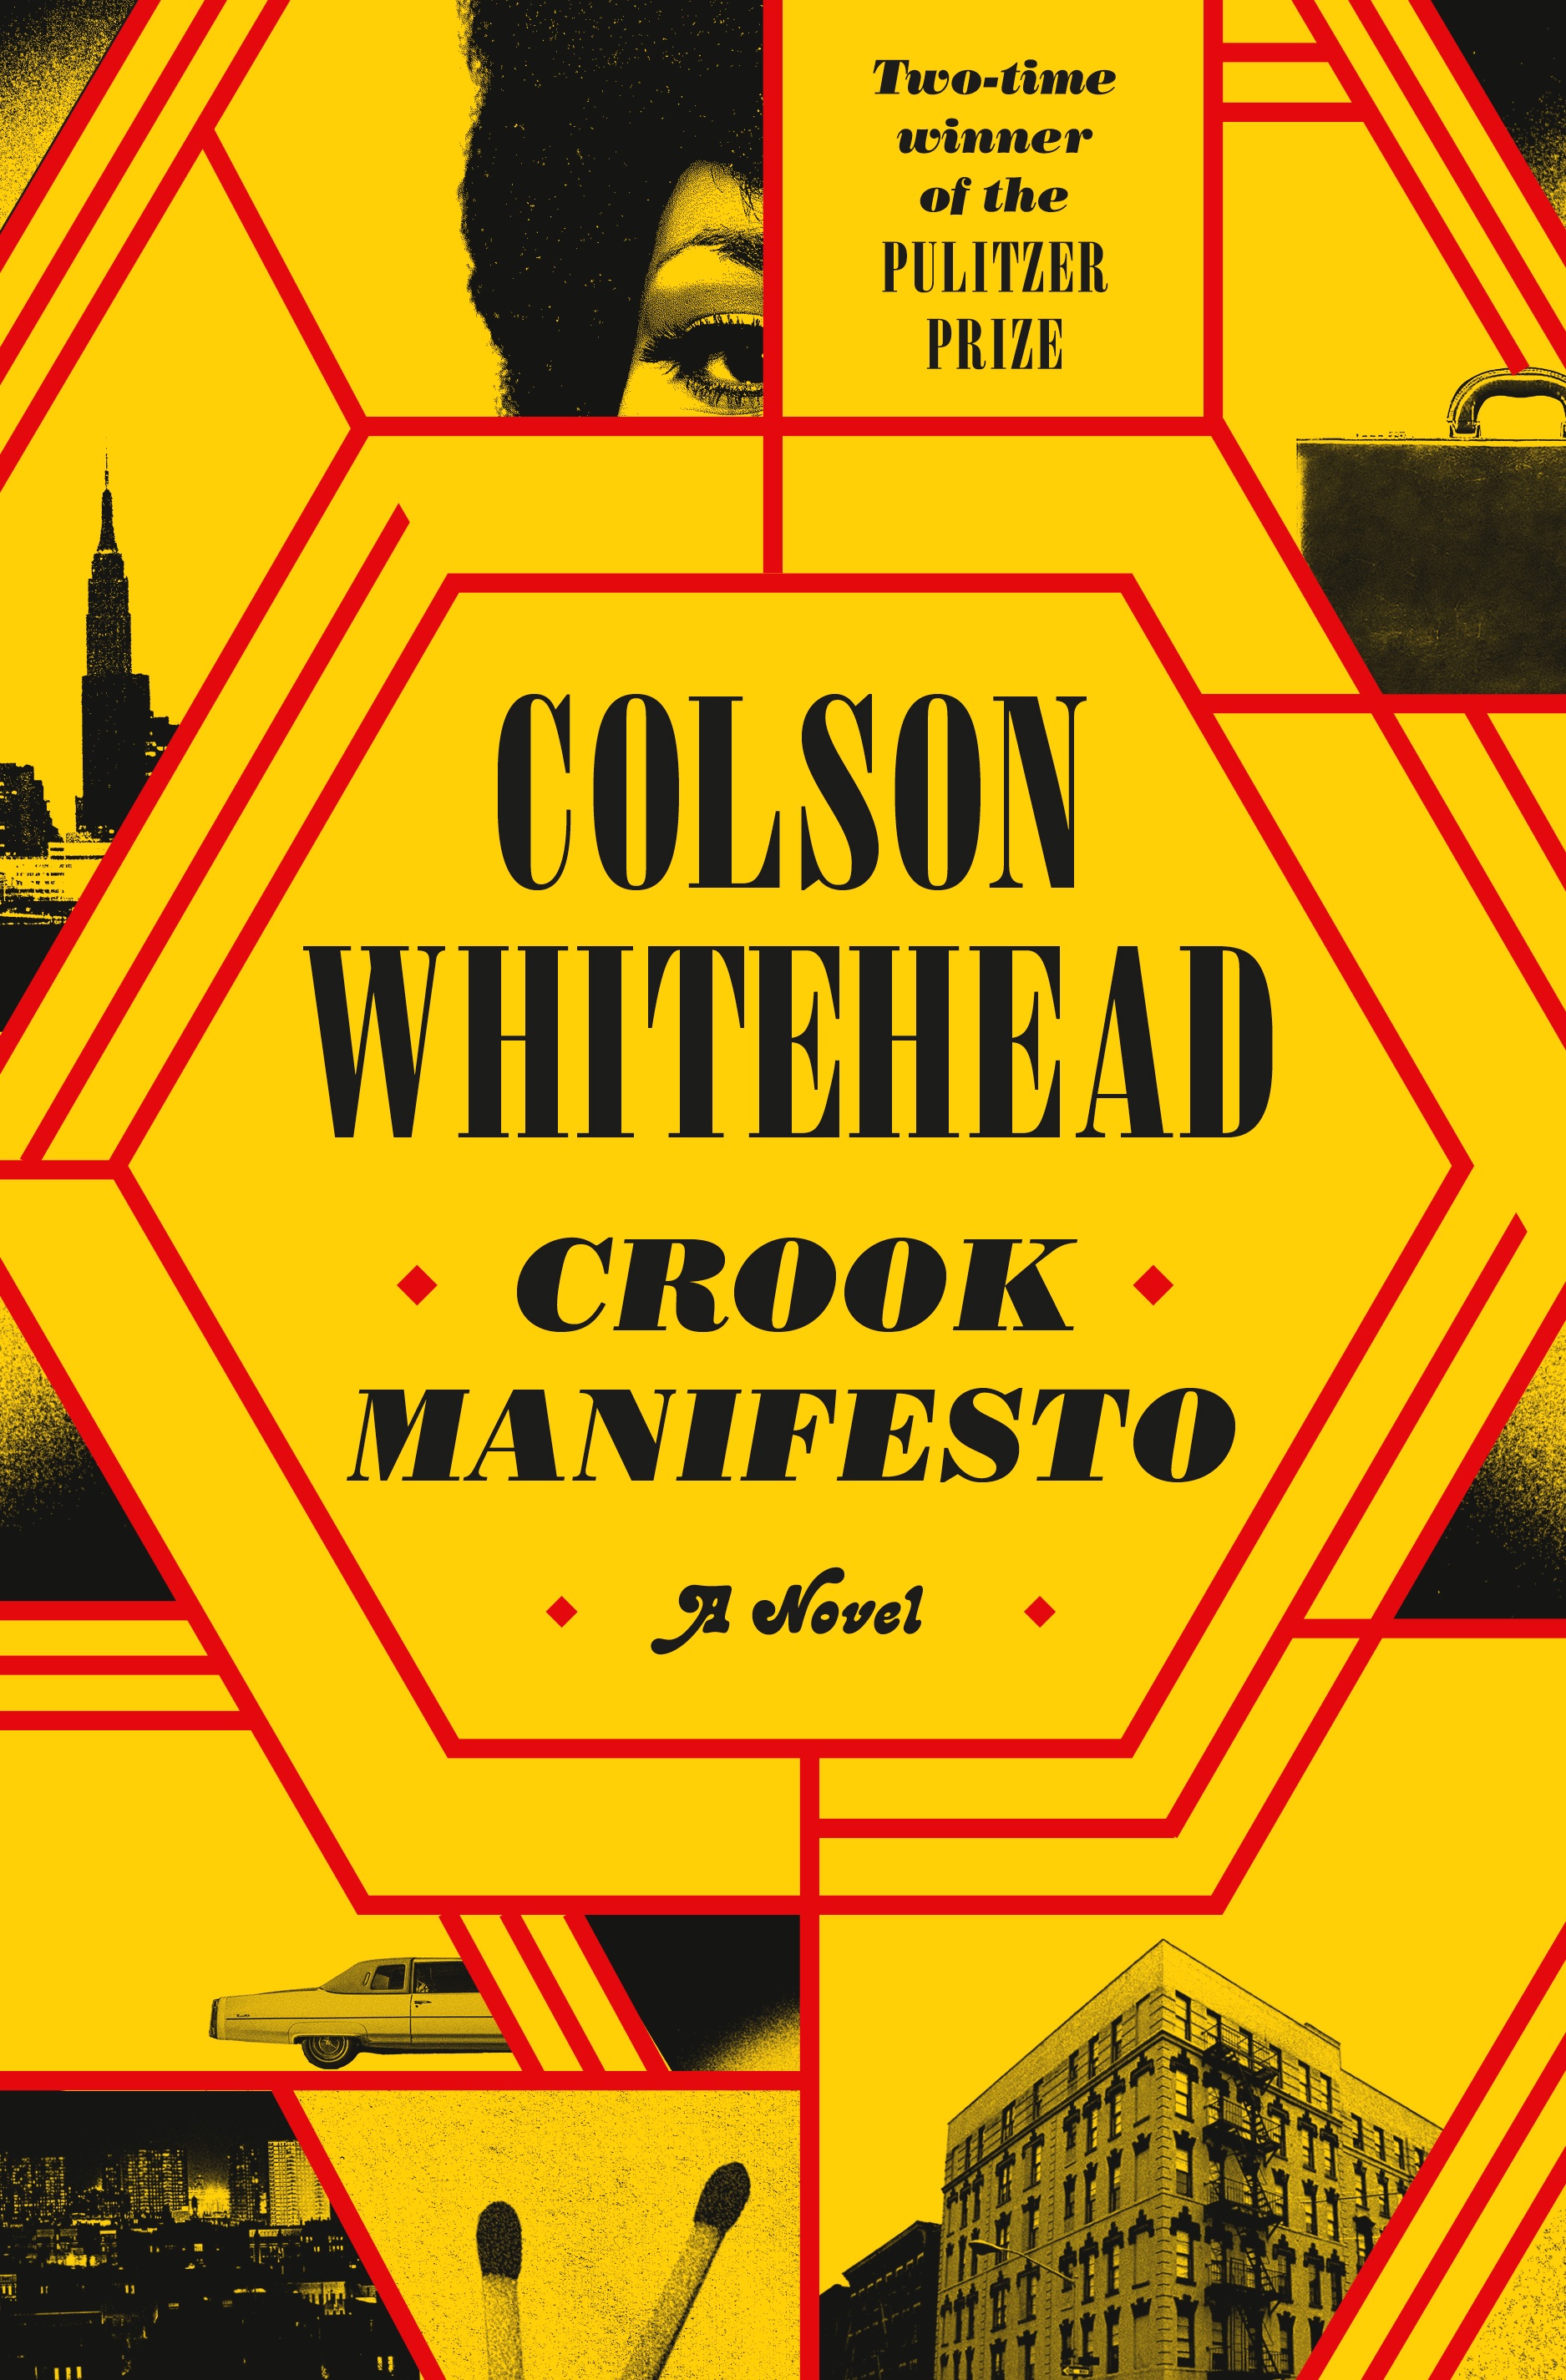 The cover of Colson Whitehead’s book “Crook Manifesto.”